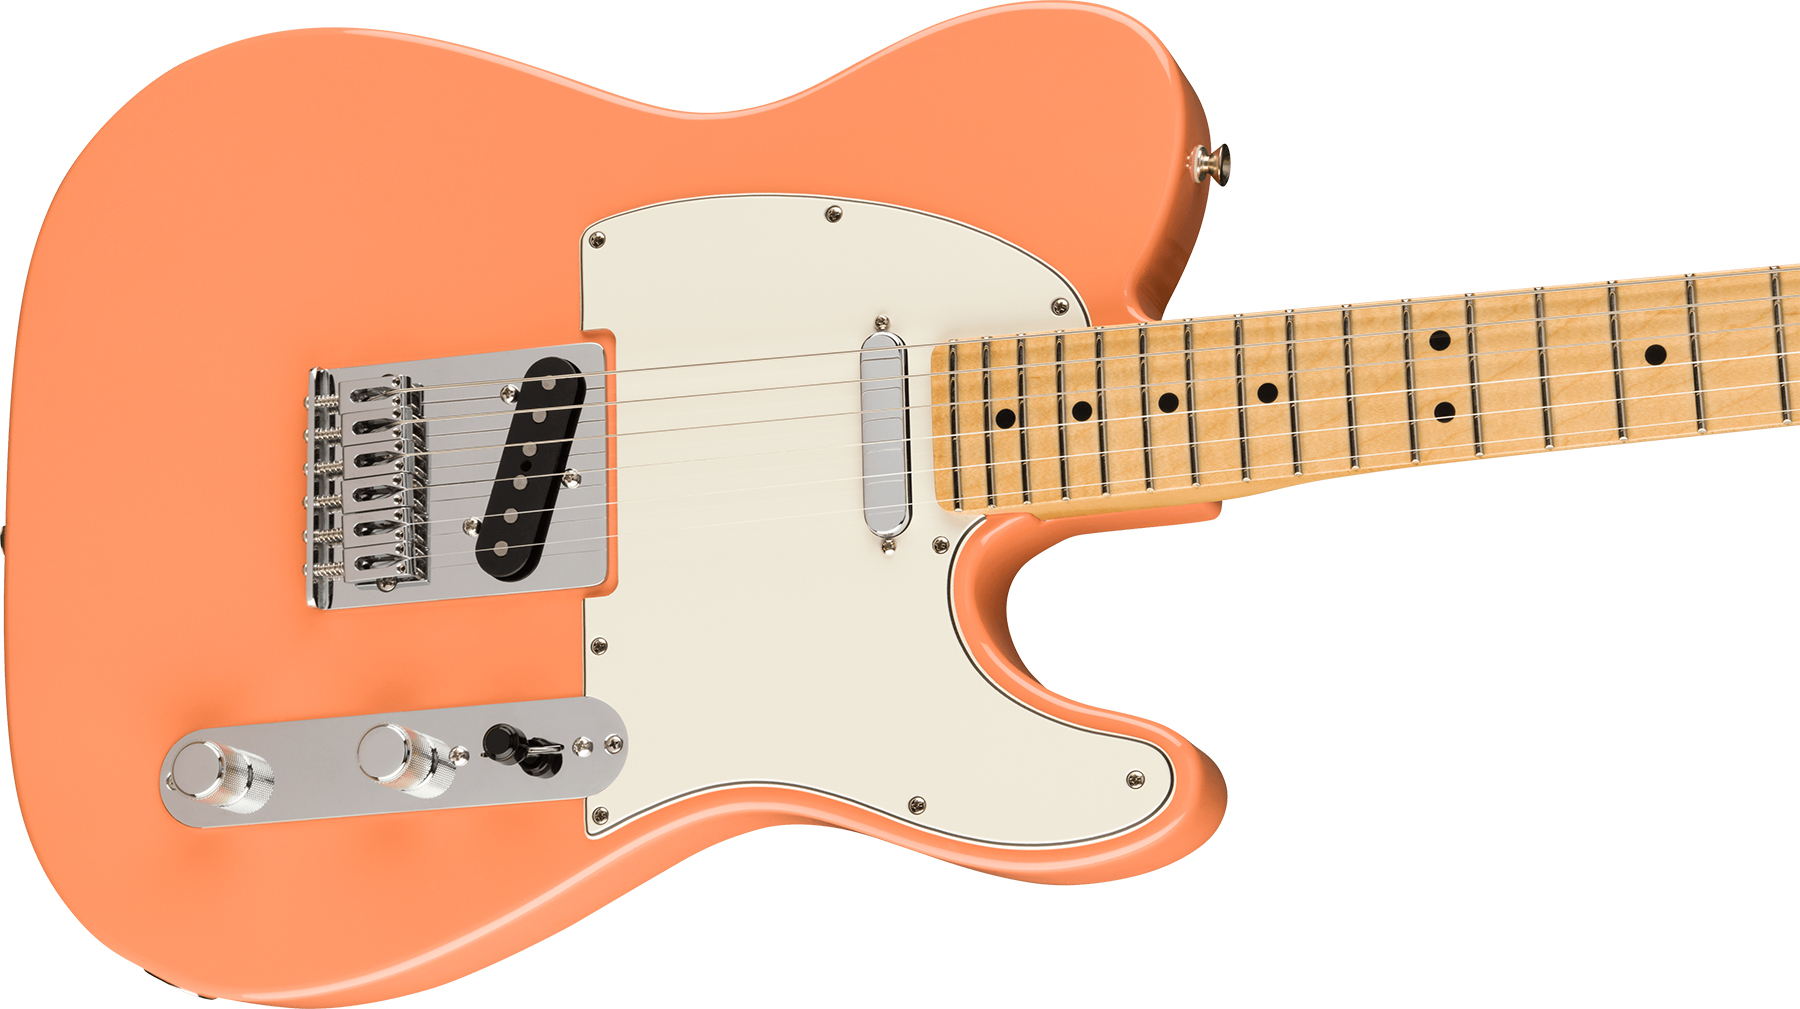 Fender Tele Player Ltd Mex 2s Ht Mn - Pacific Peach - Tel shape electric guitar - Variation 2